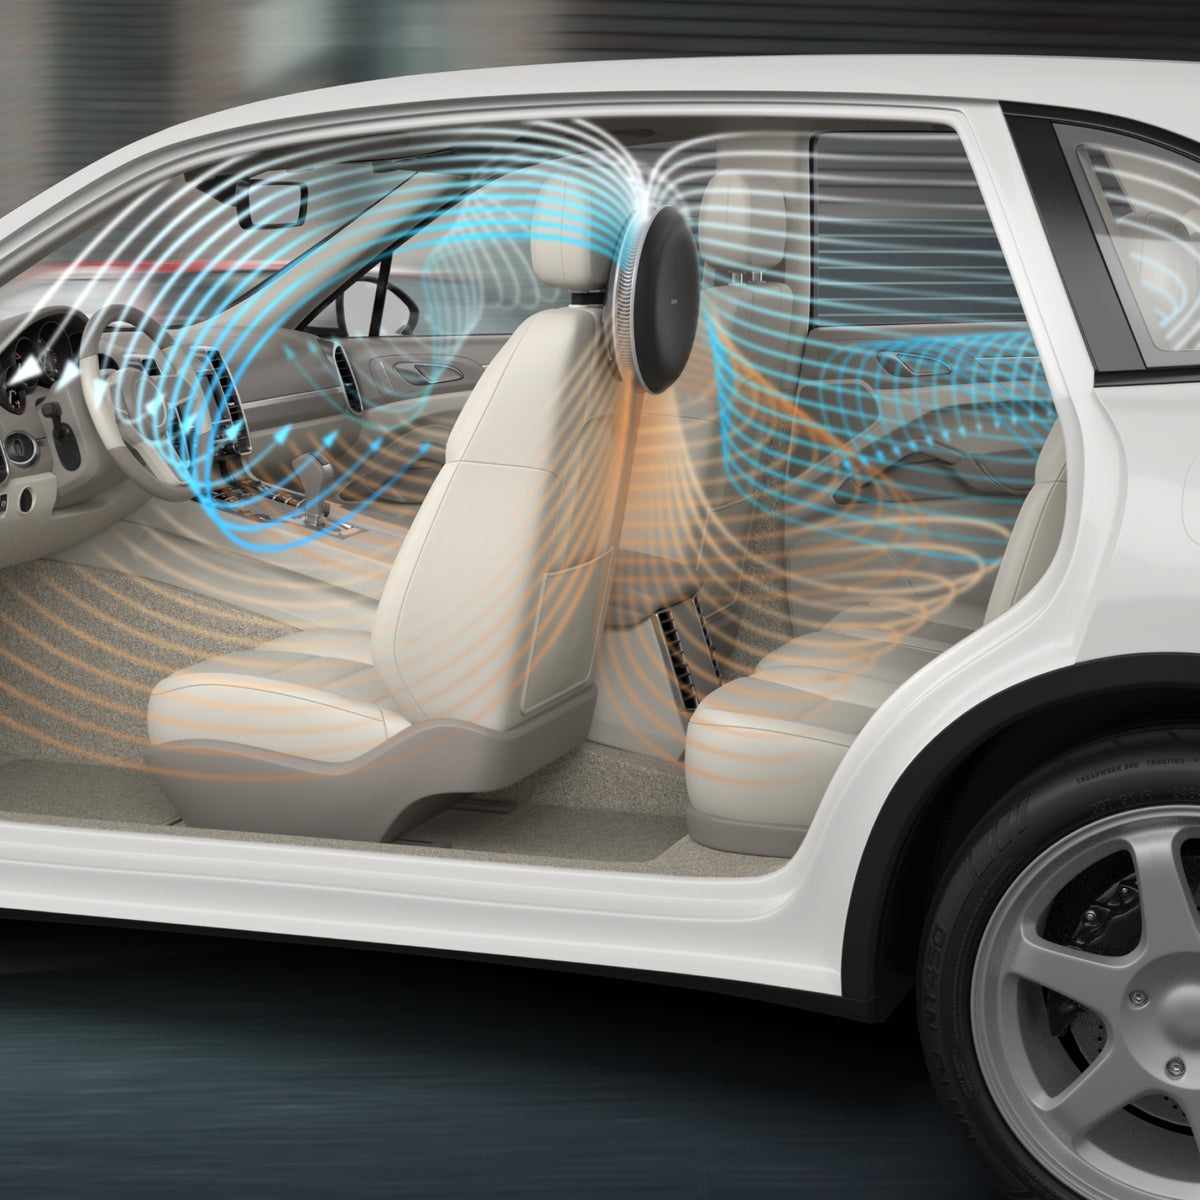 Airflow of car interior with the Atem Car